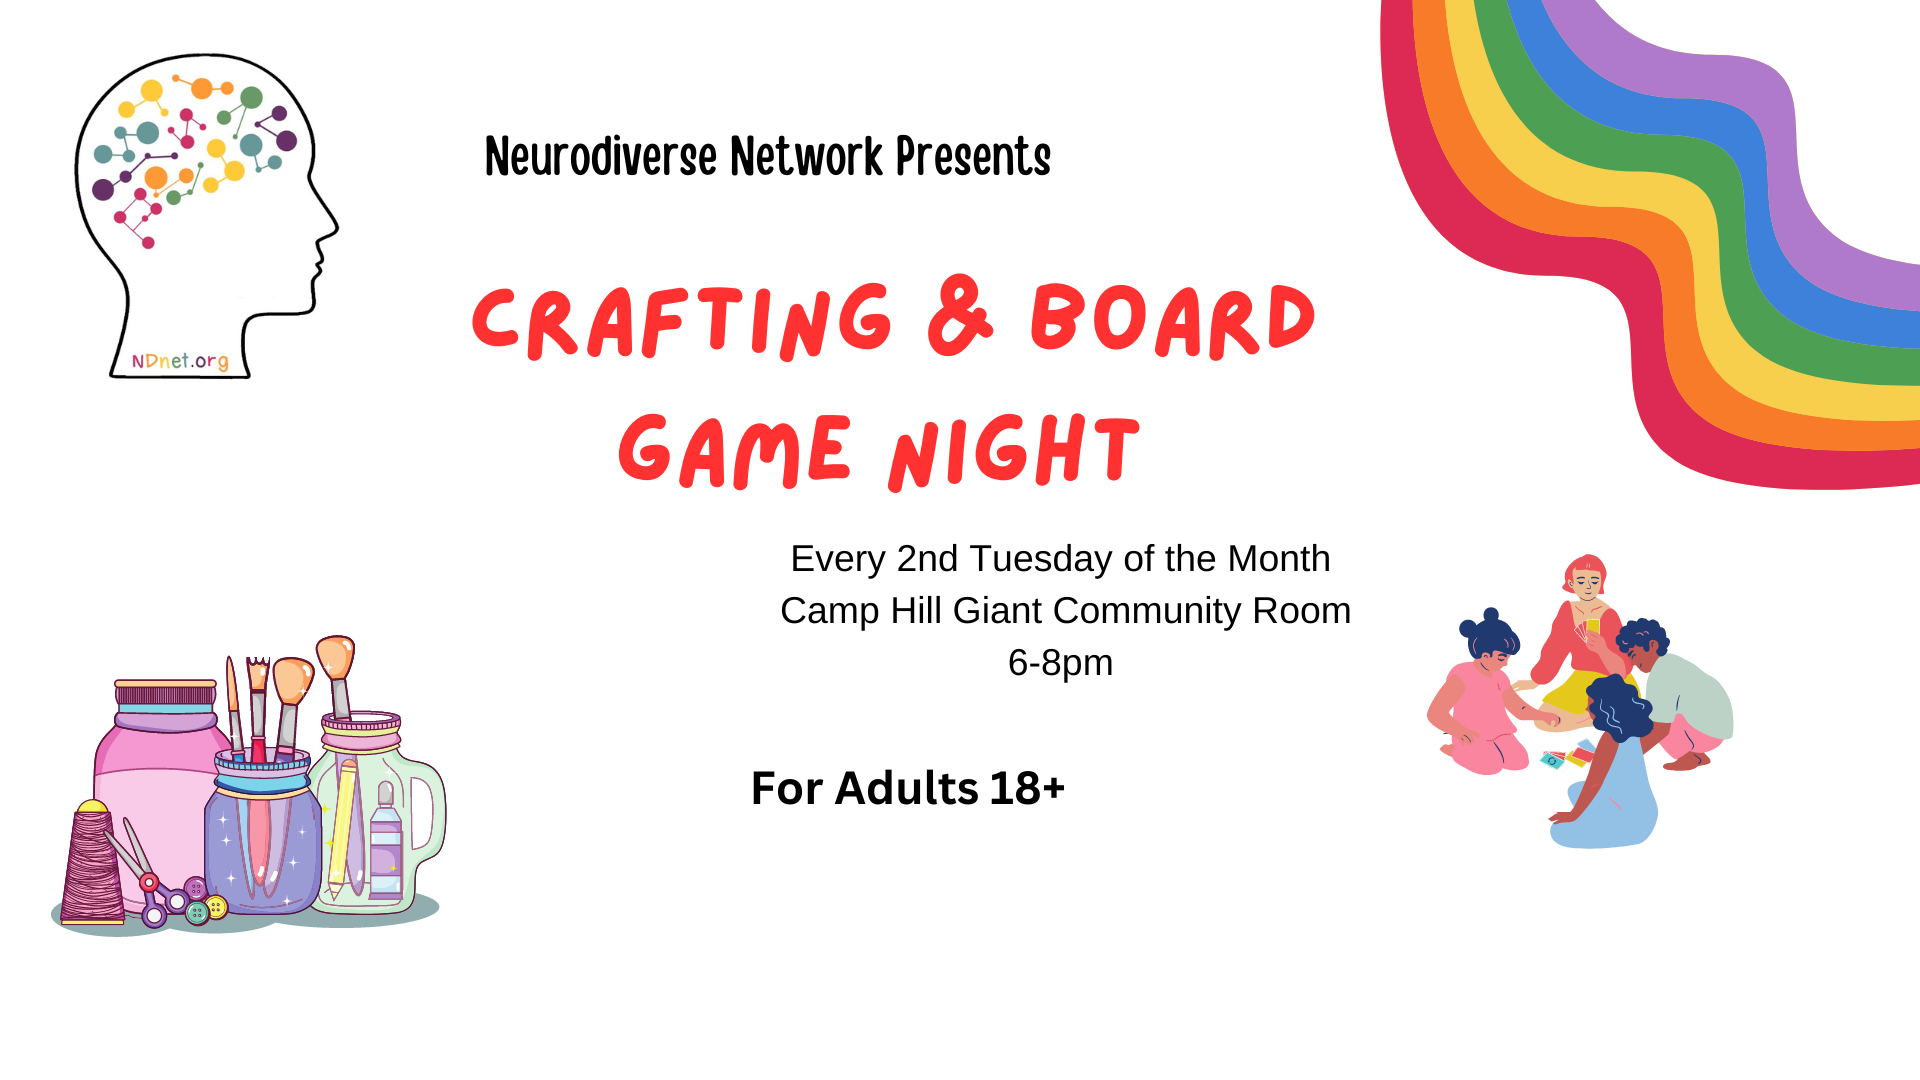 adult game night camphill harrisburg craft free event autism adhd neurodiverse